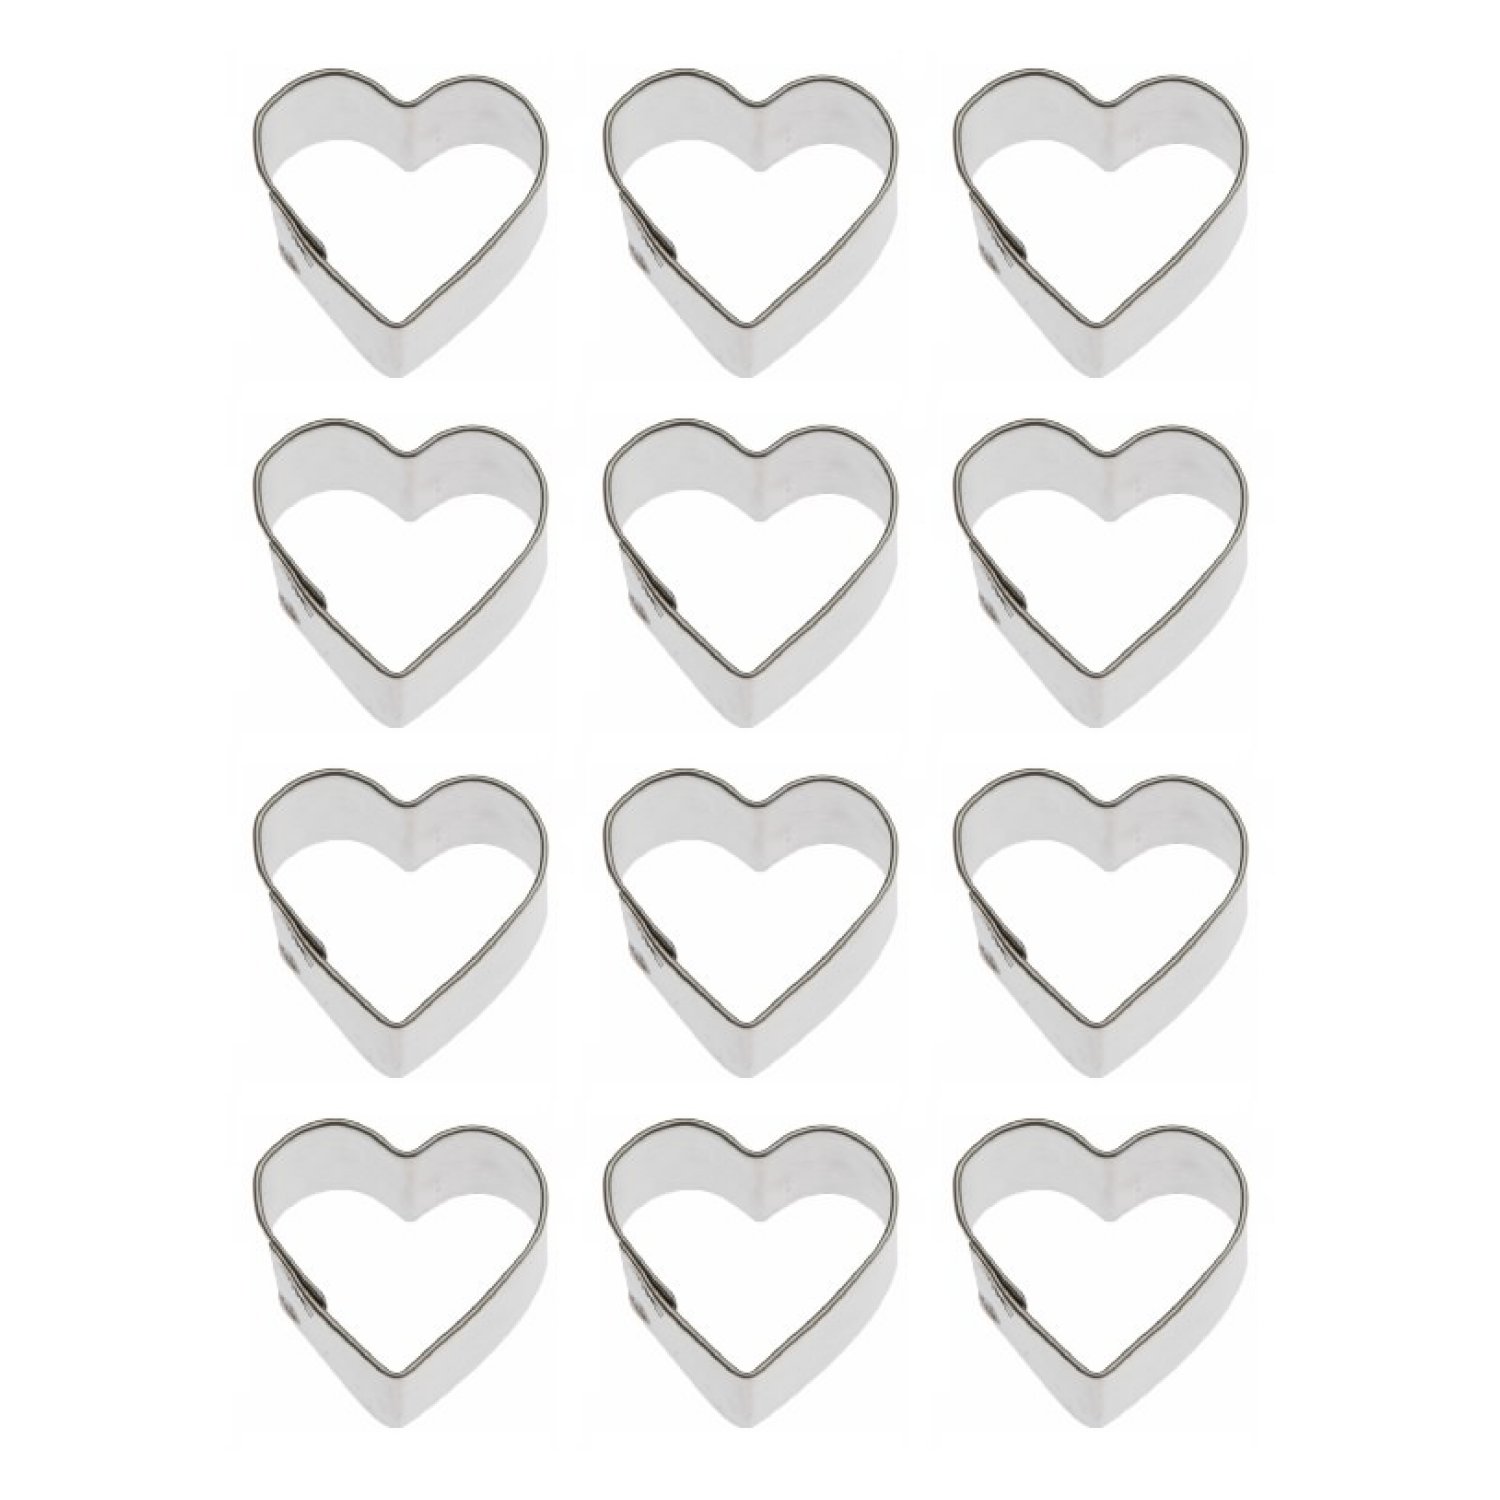 1 Dozen (12) Tiny Mini Heart 1 inch Cookie Cutters | The Cookie Cutter Shop